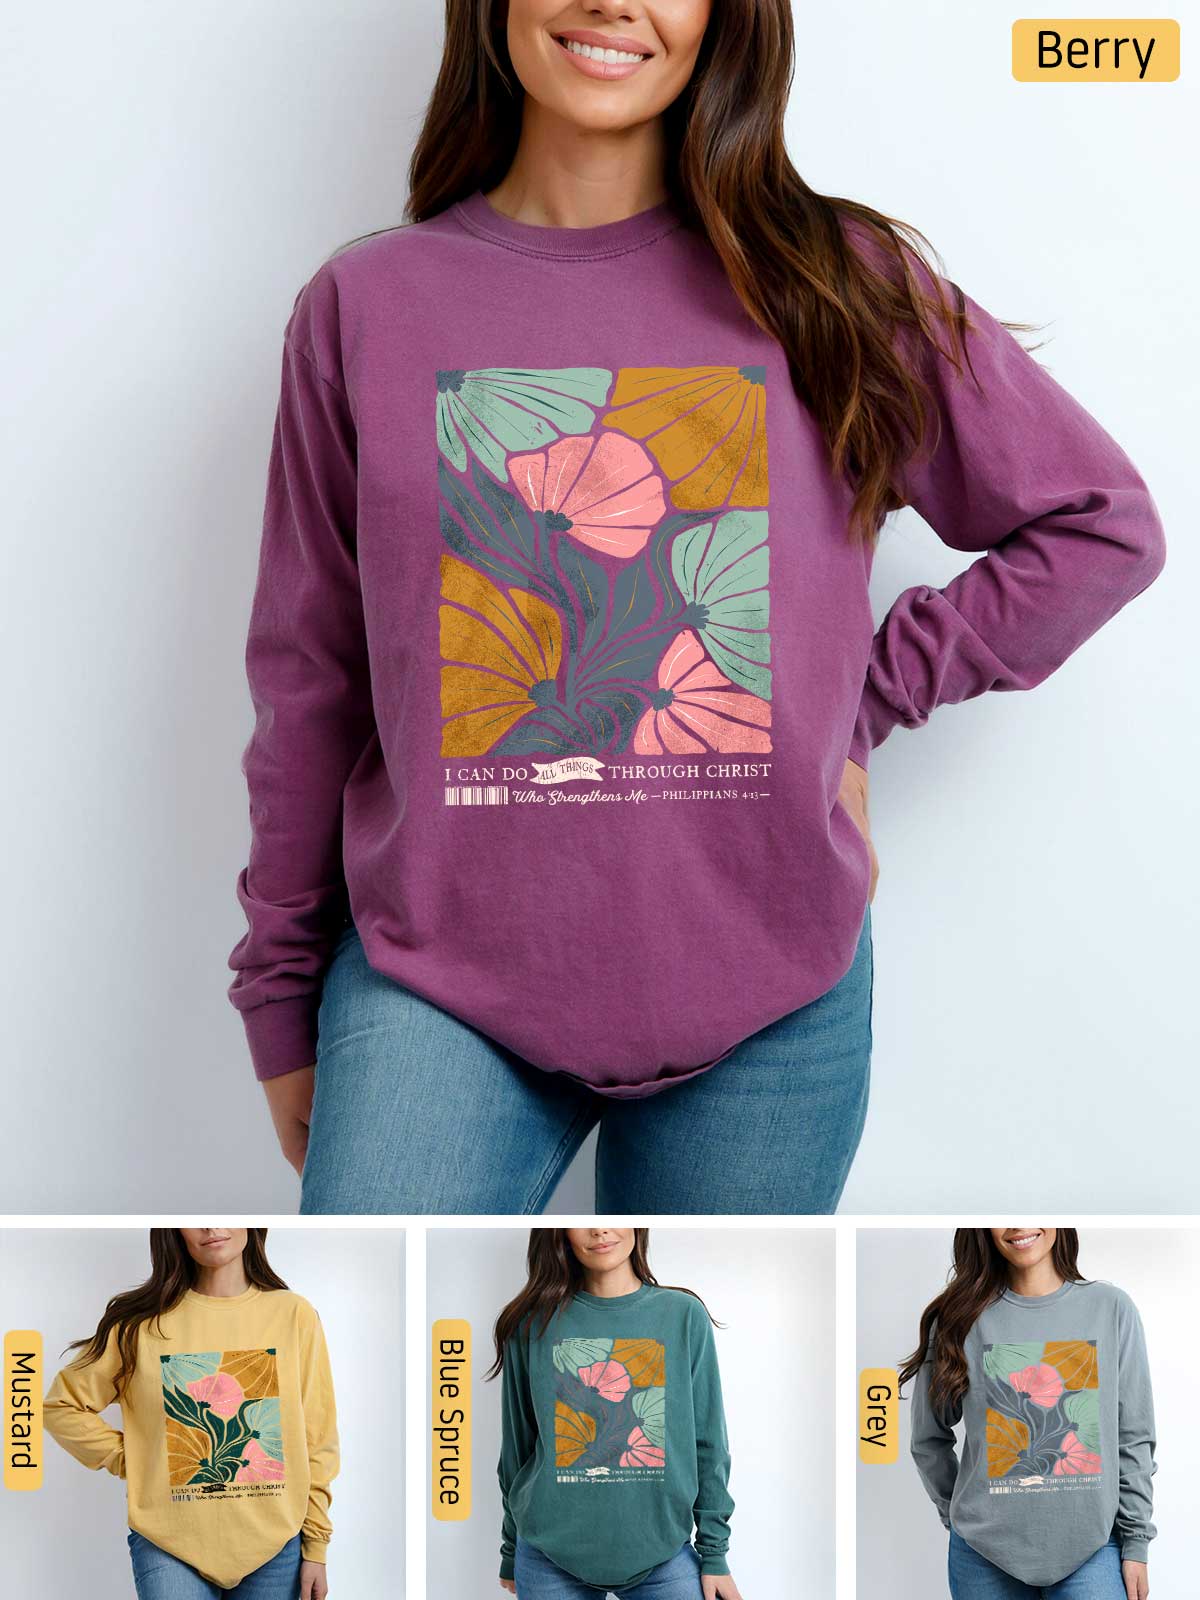 a woman wearing a sweatshirt with a flower design on it